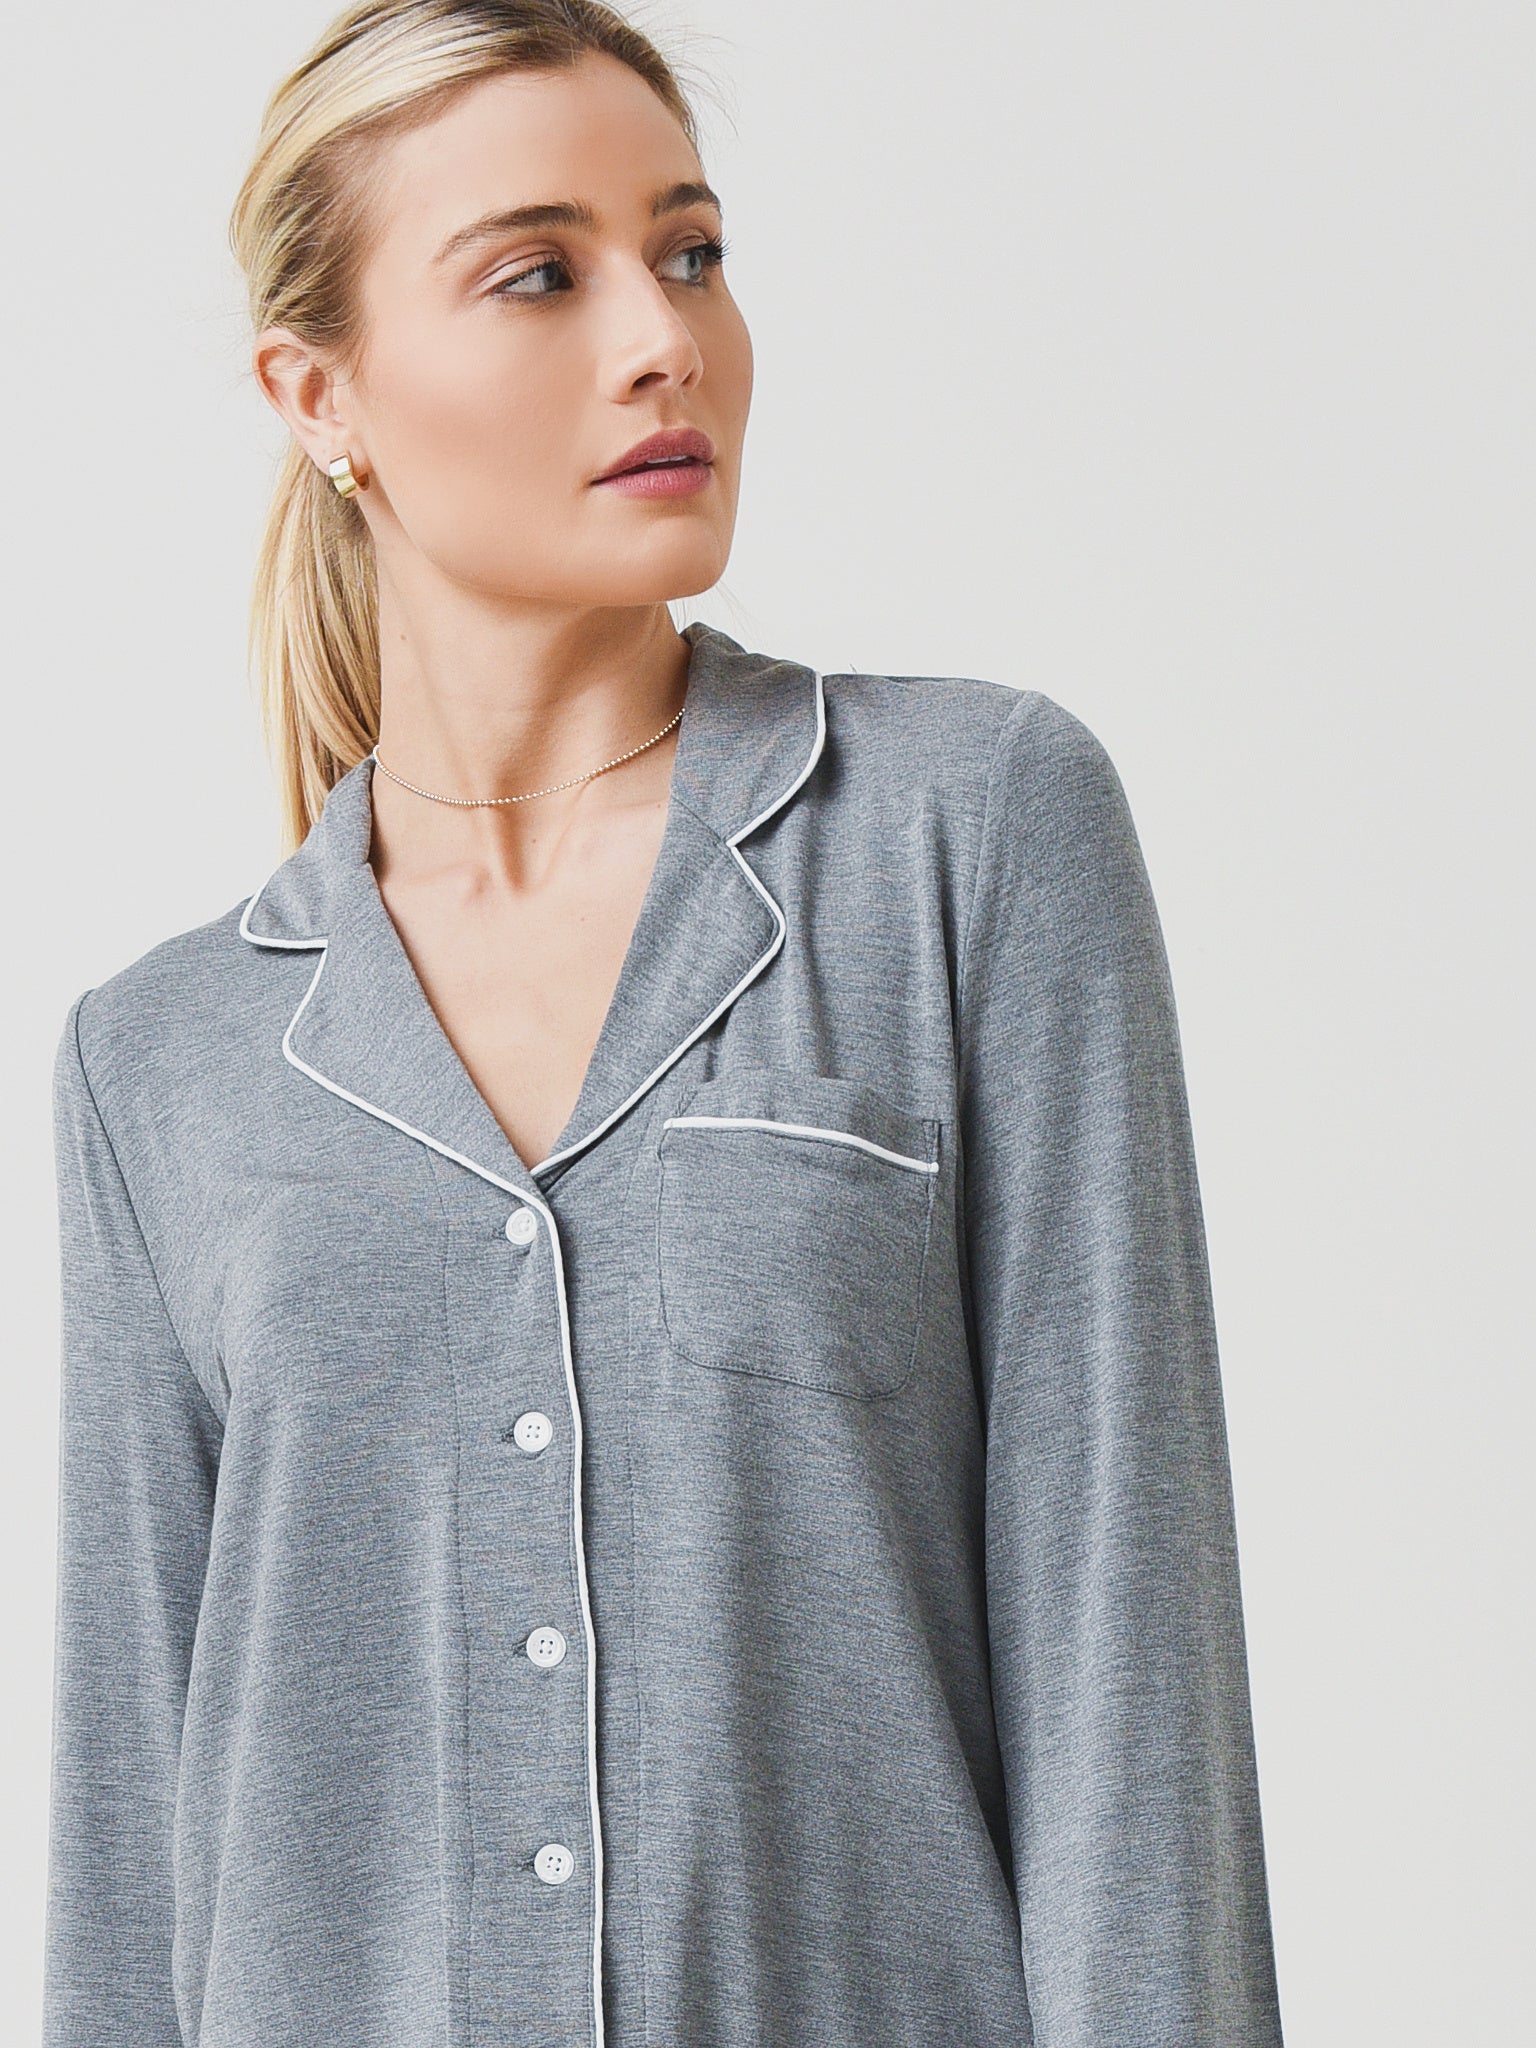 Z Supply Softest Modal Pajama Set in Gray